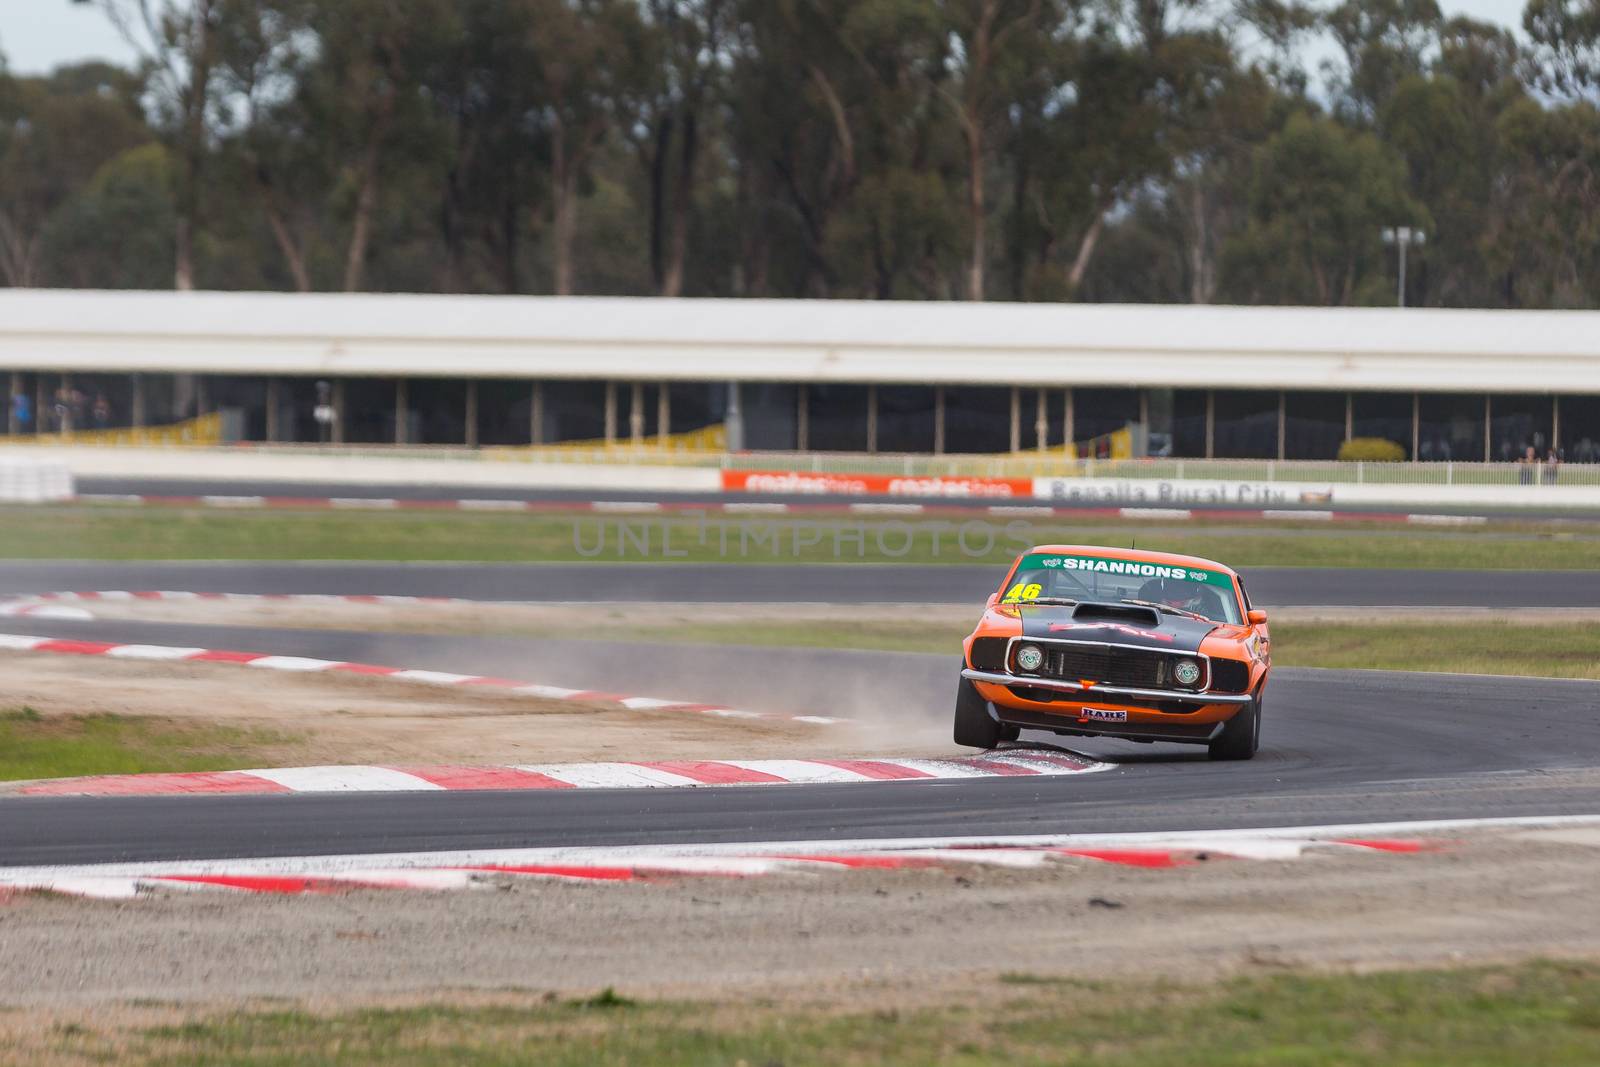 V8 Supercars, Winton, Australia by davidhewison